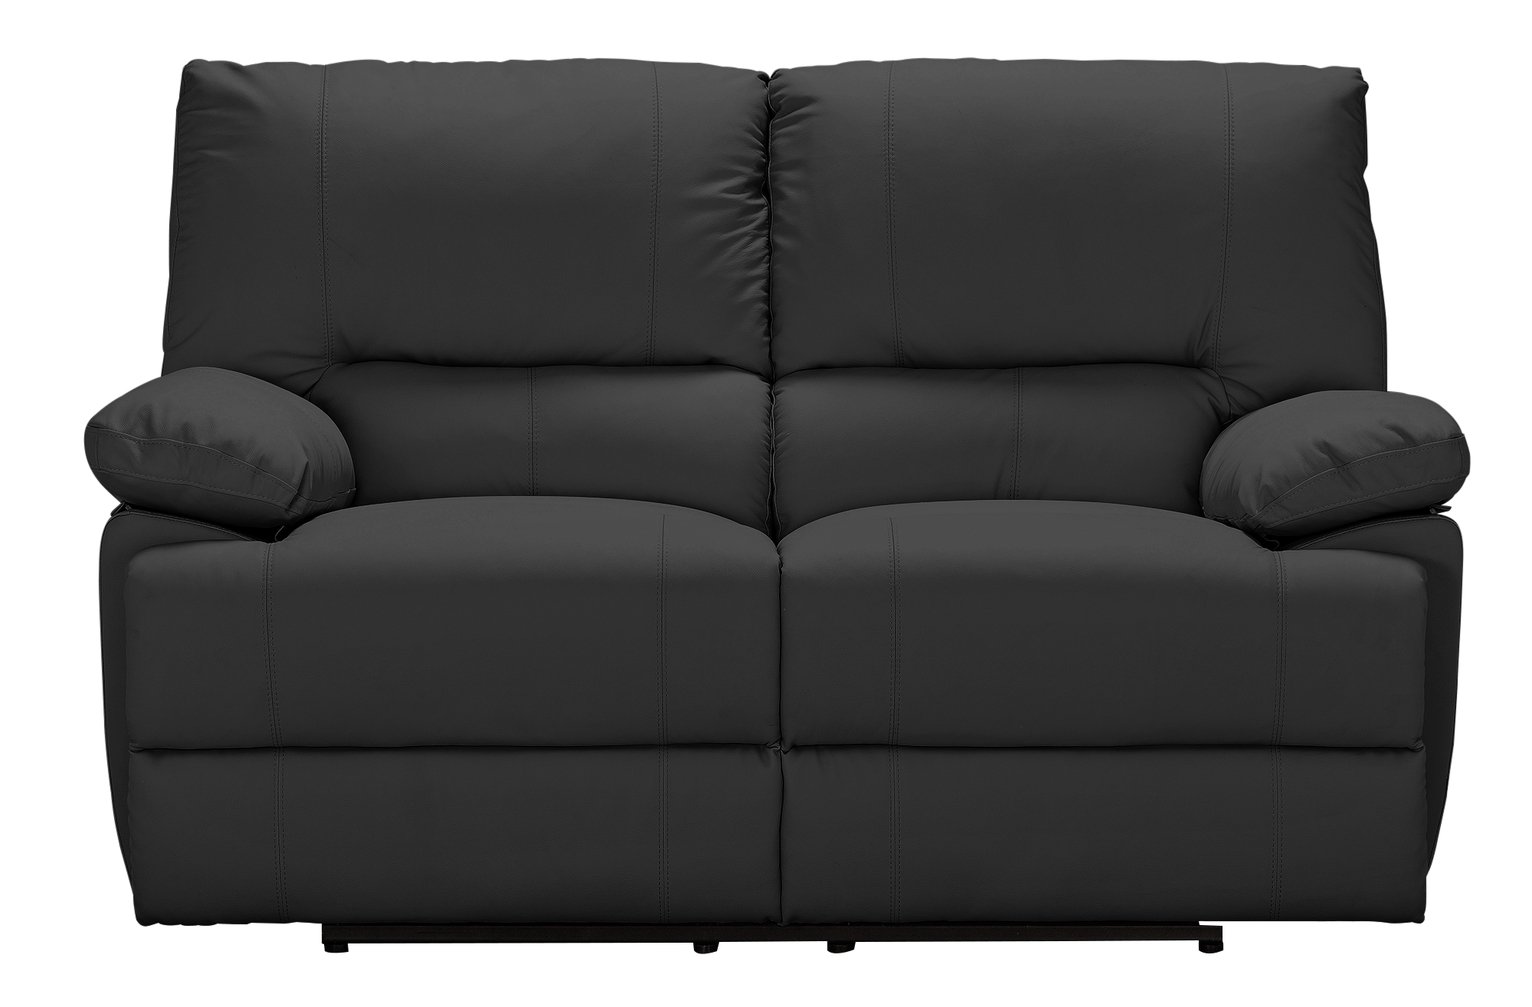 Argos Home Devlin 2 Seater Faux Leather Recliner Sofa -Black